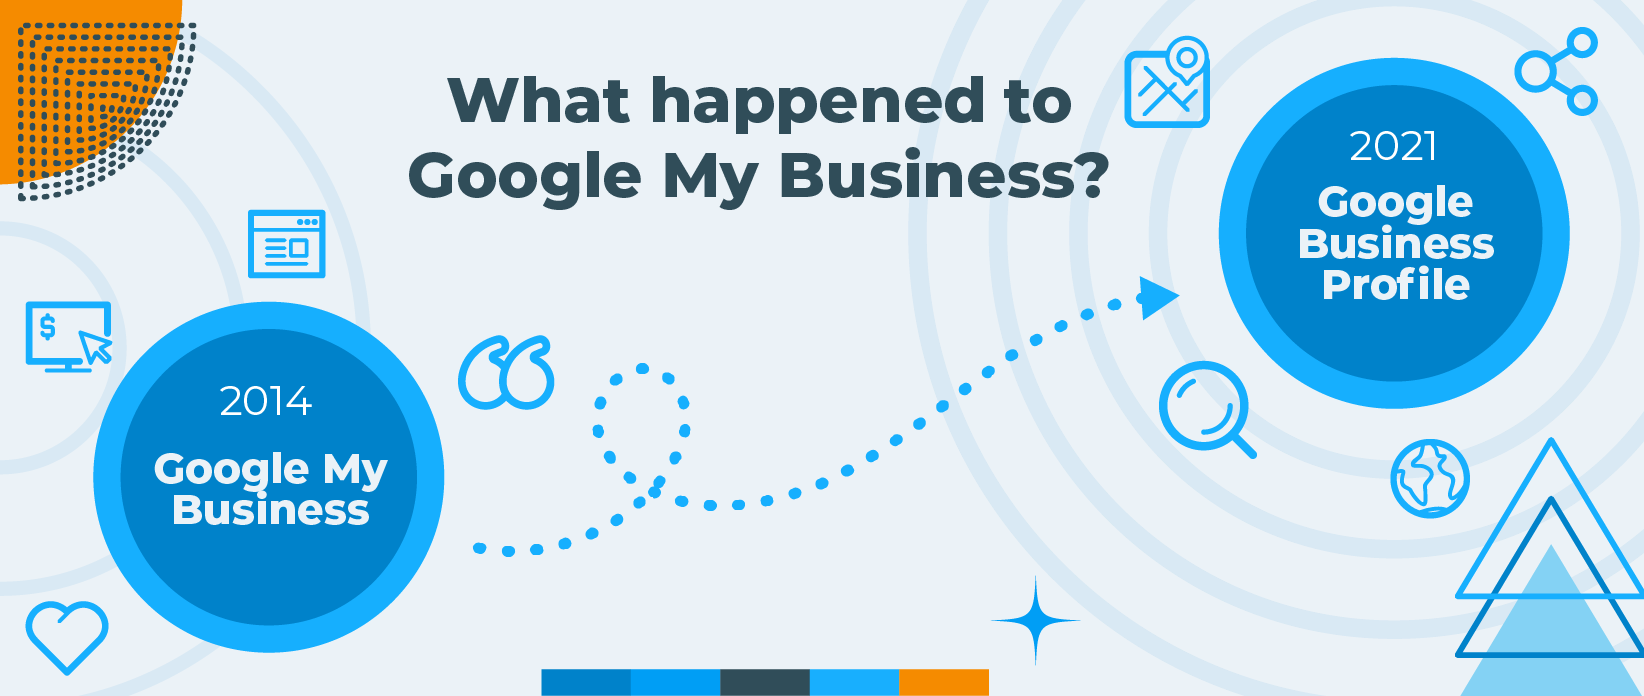 Google My Business Evolution to Google Business Profile